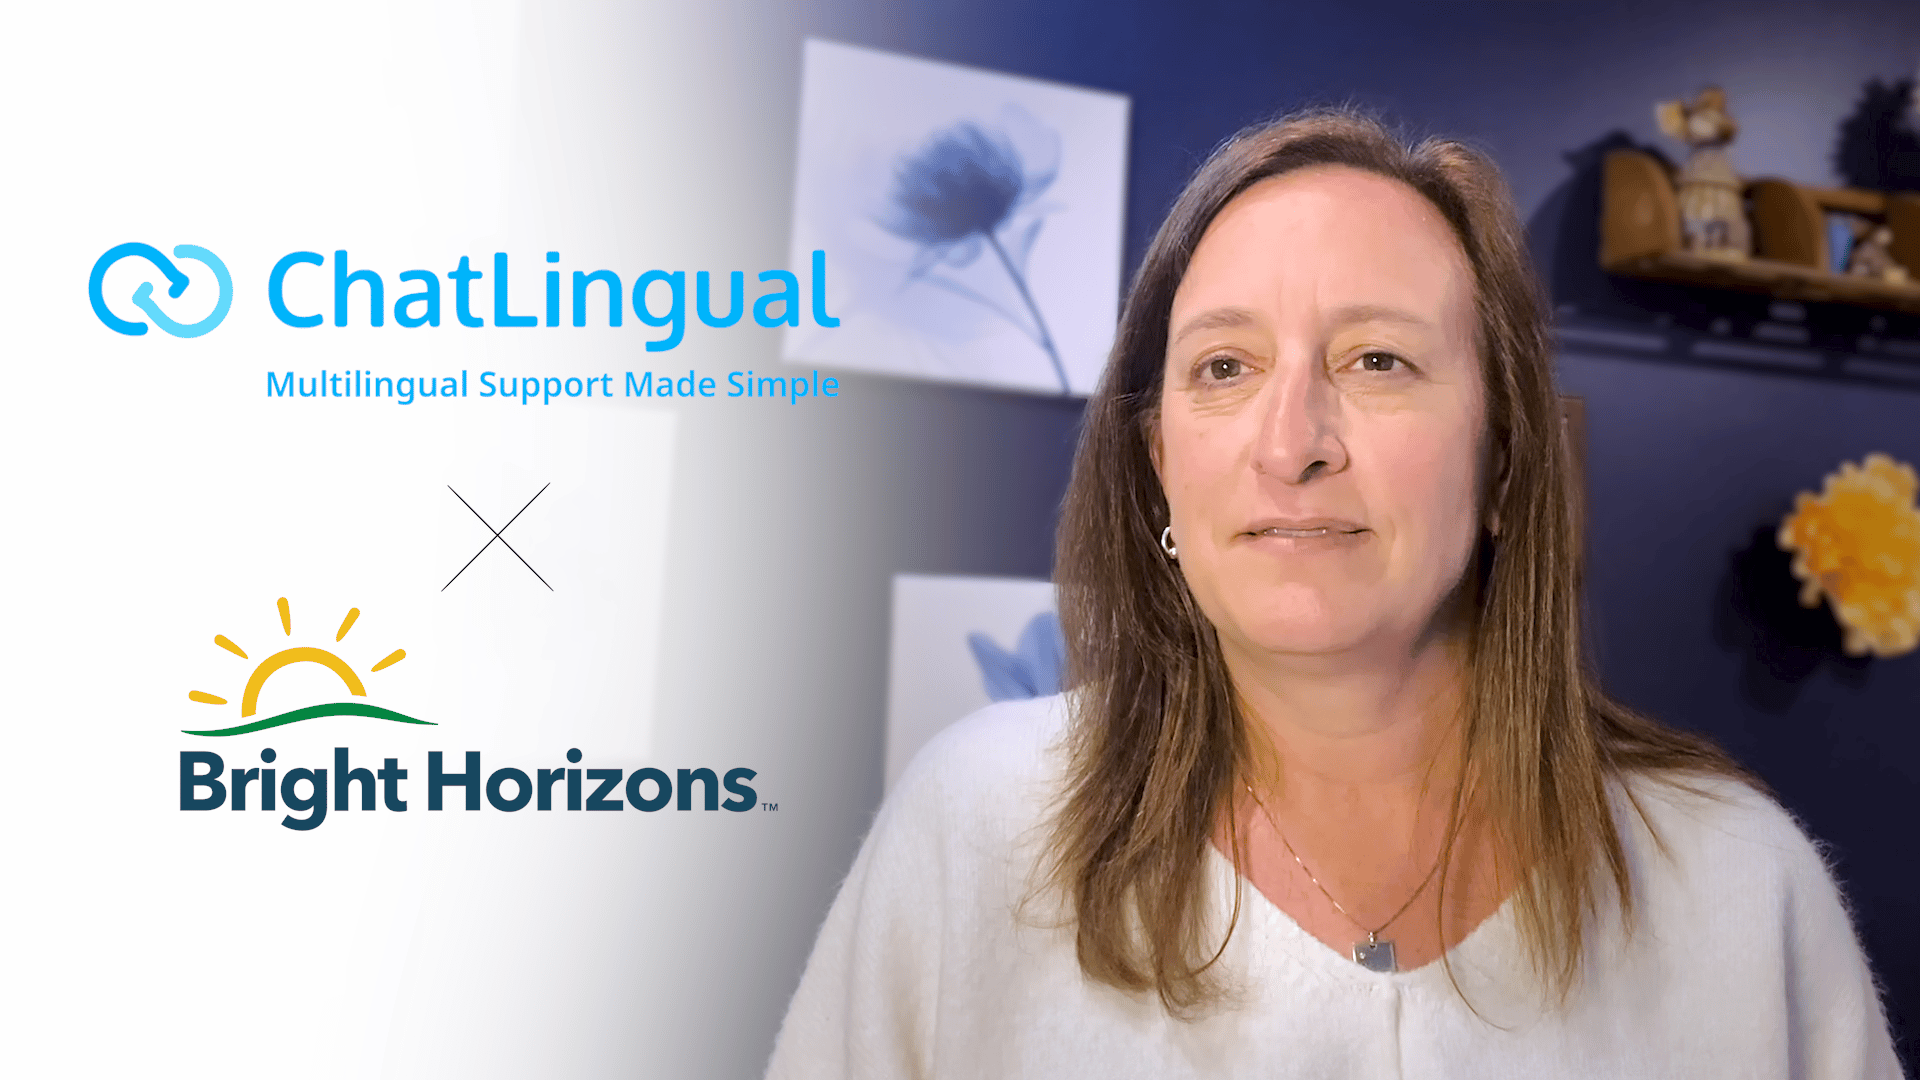 Bright Horizons provides multilingual customer support through ChatLingual